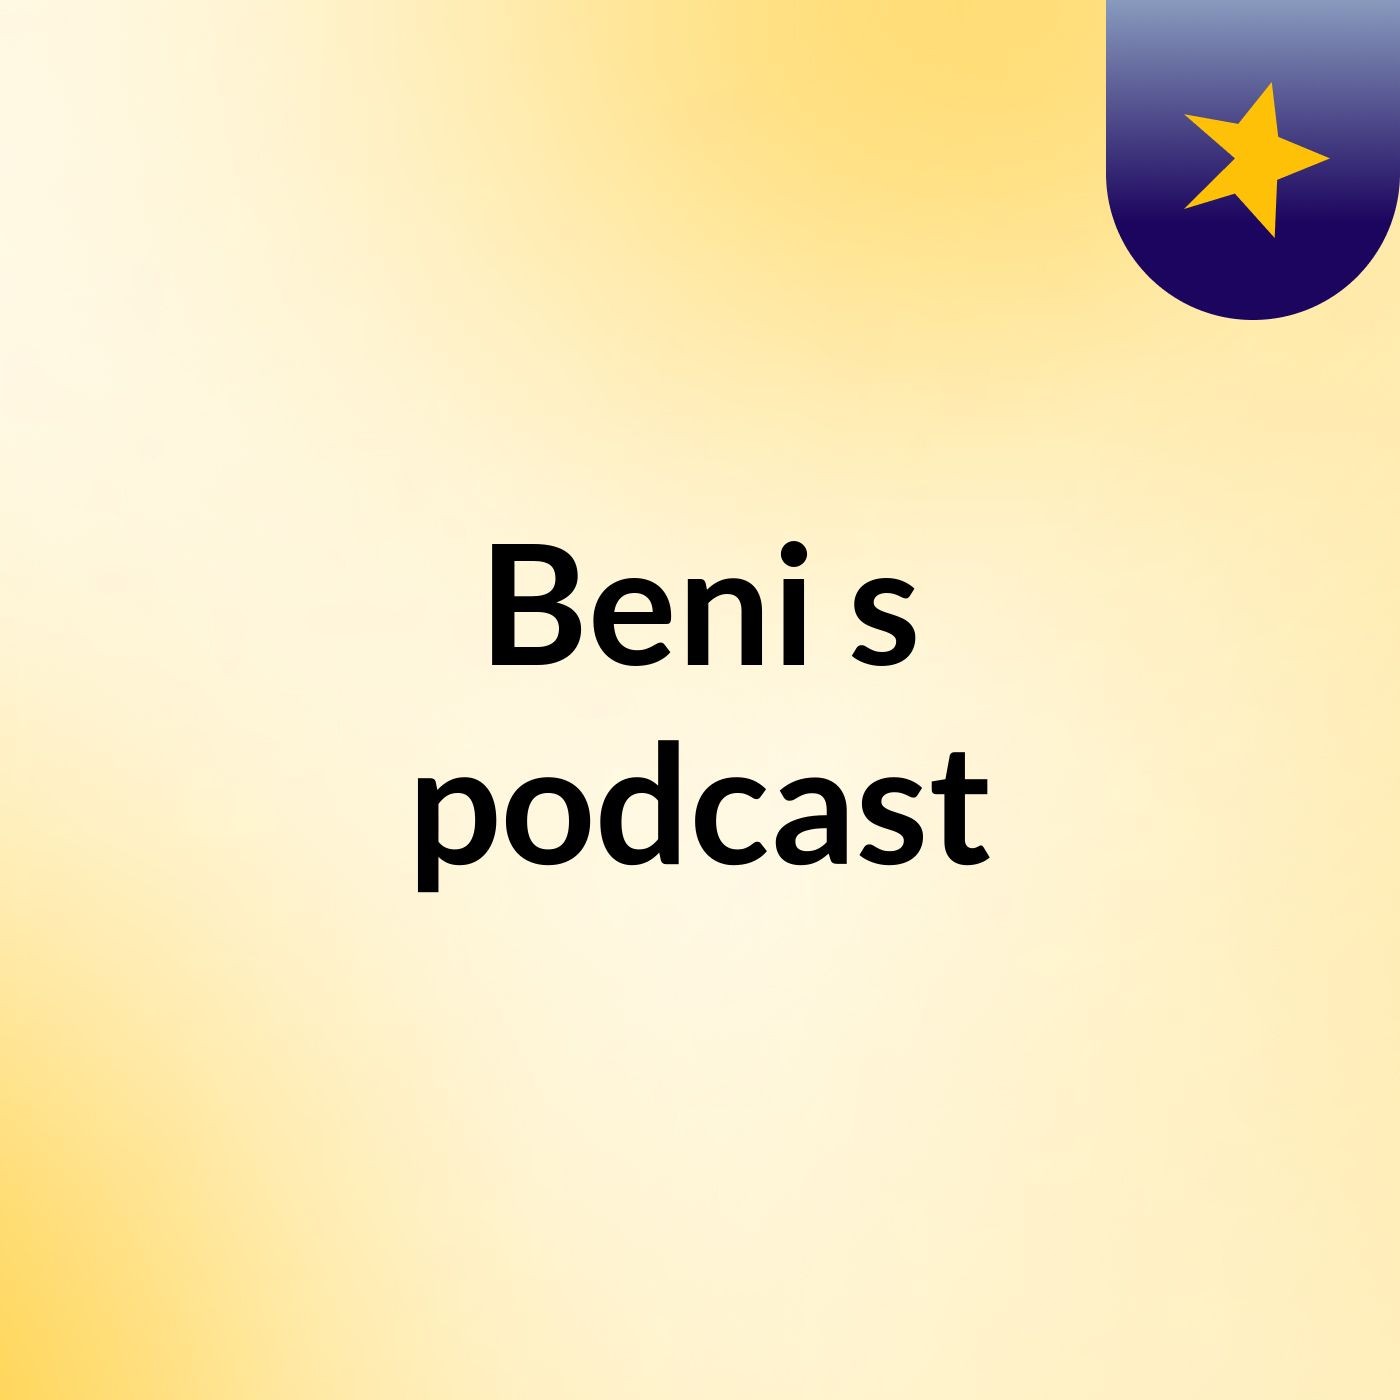 Episode 3 - Beni's podcast